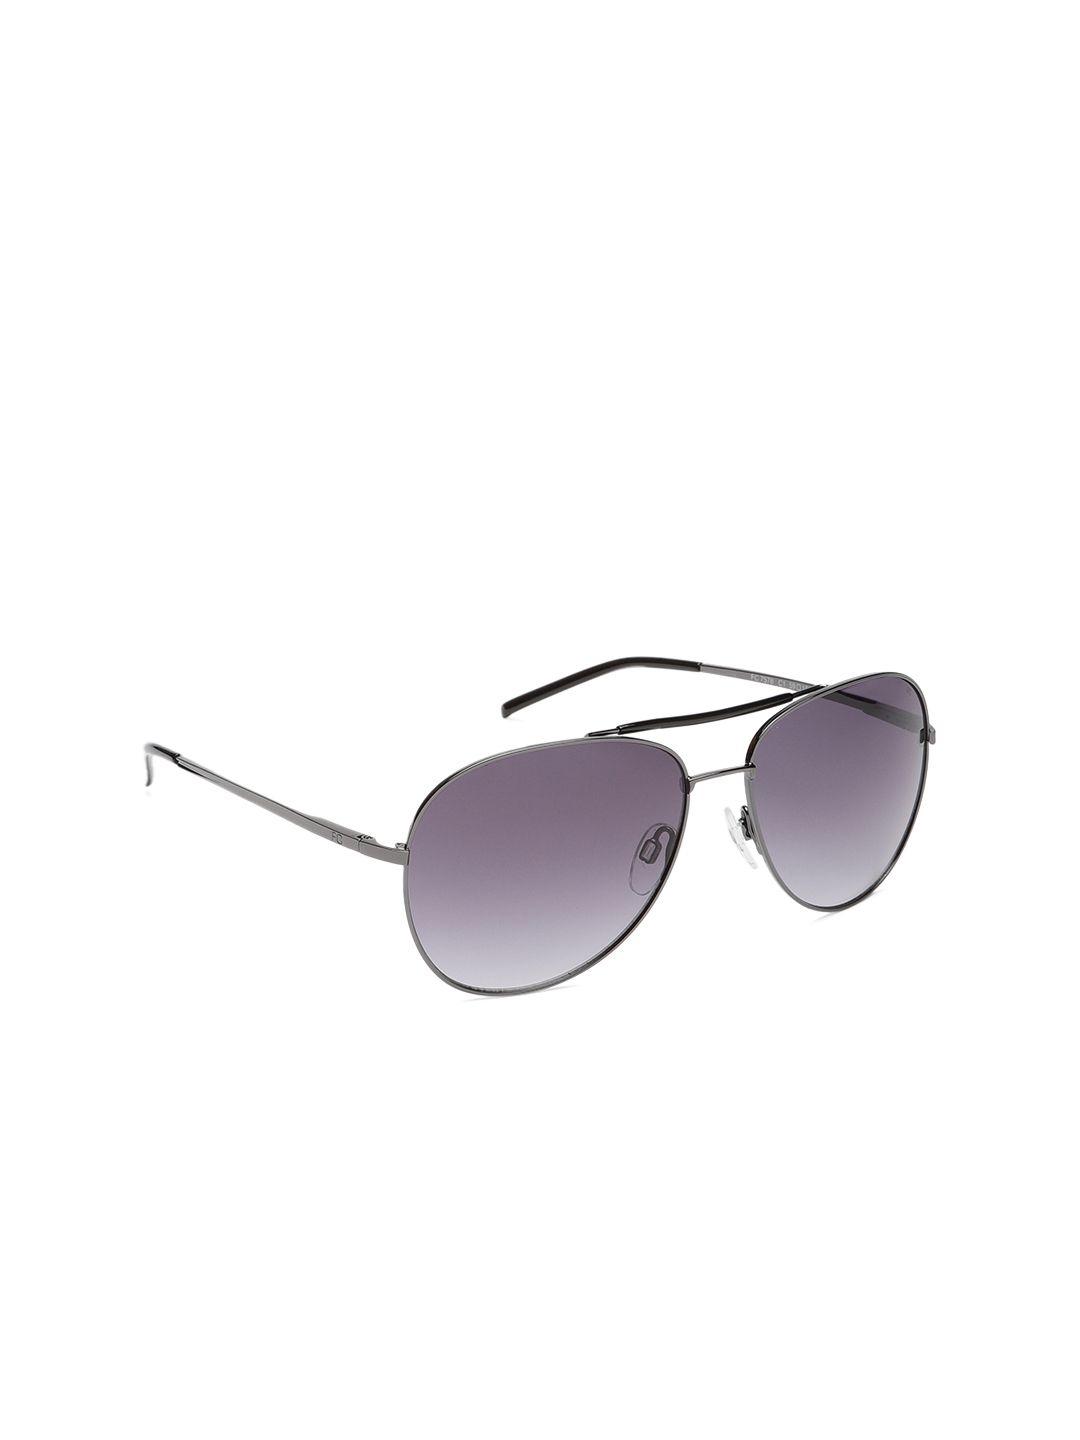 french connection unisex grey lens & gunmetal-toned aviator sunglasses fc 7578 c1